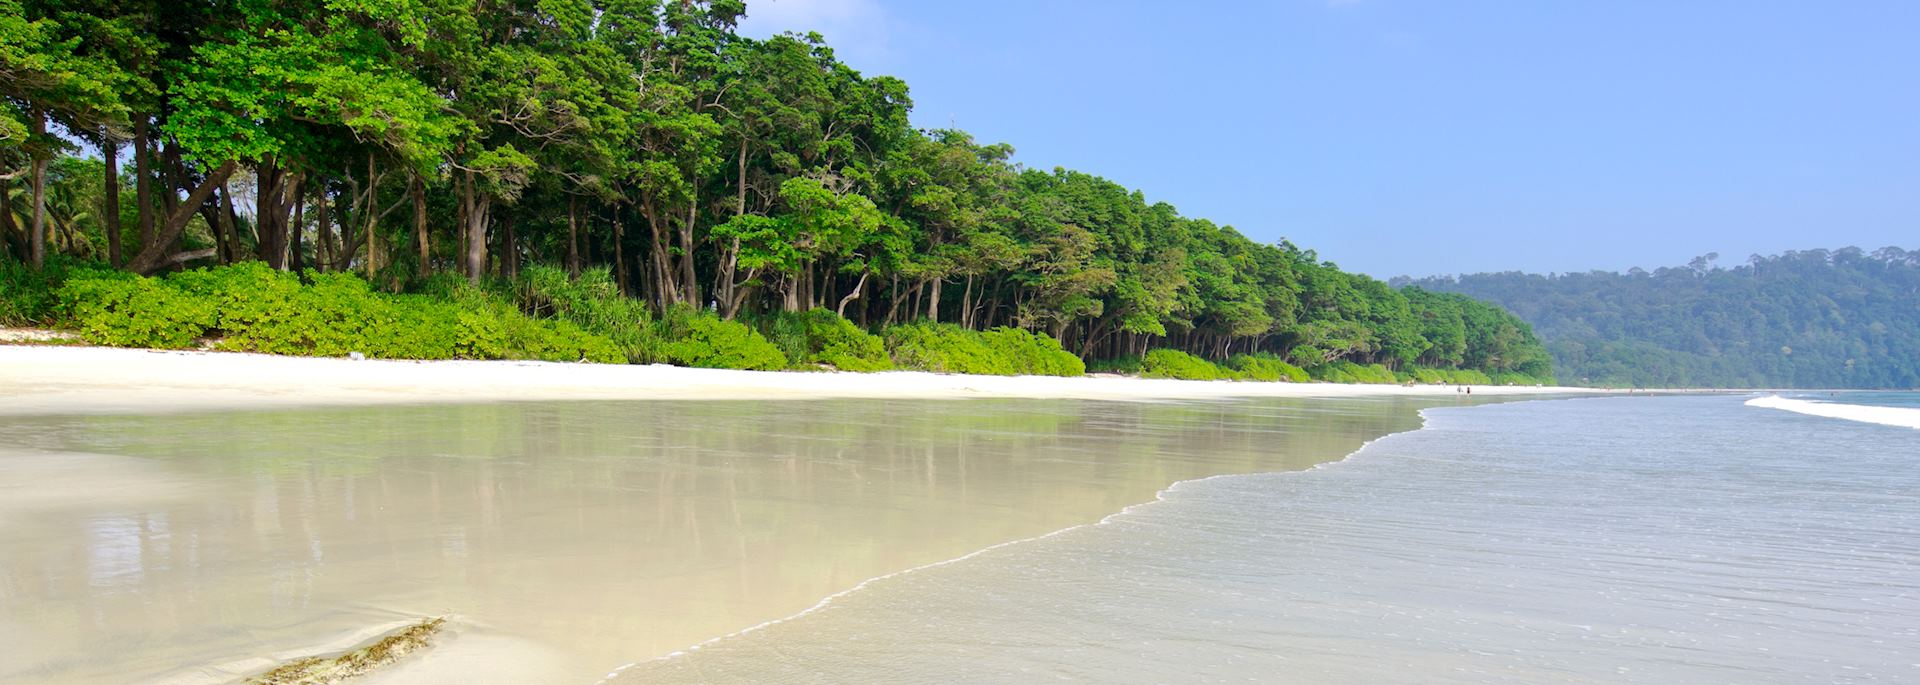 Havelock Island, Andaman Islands